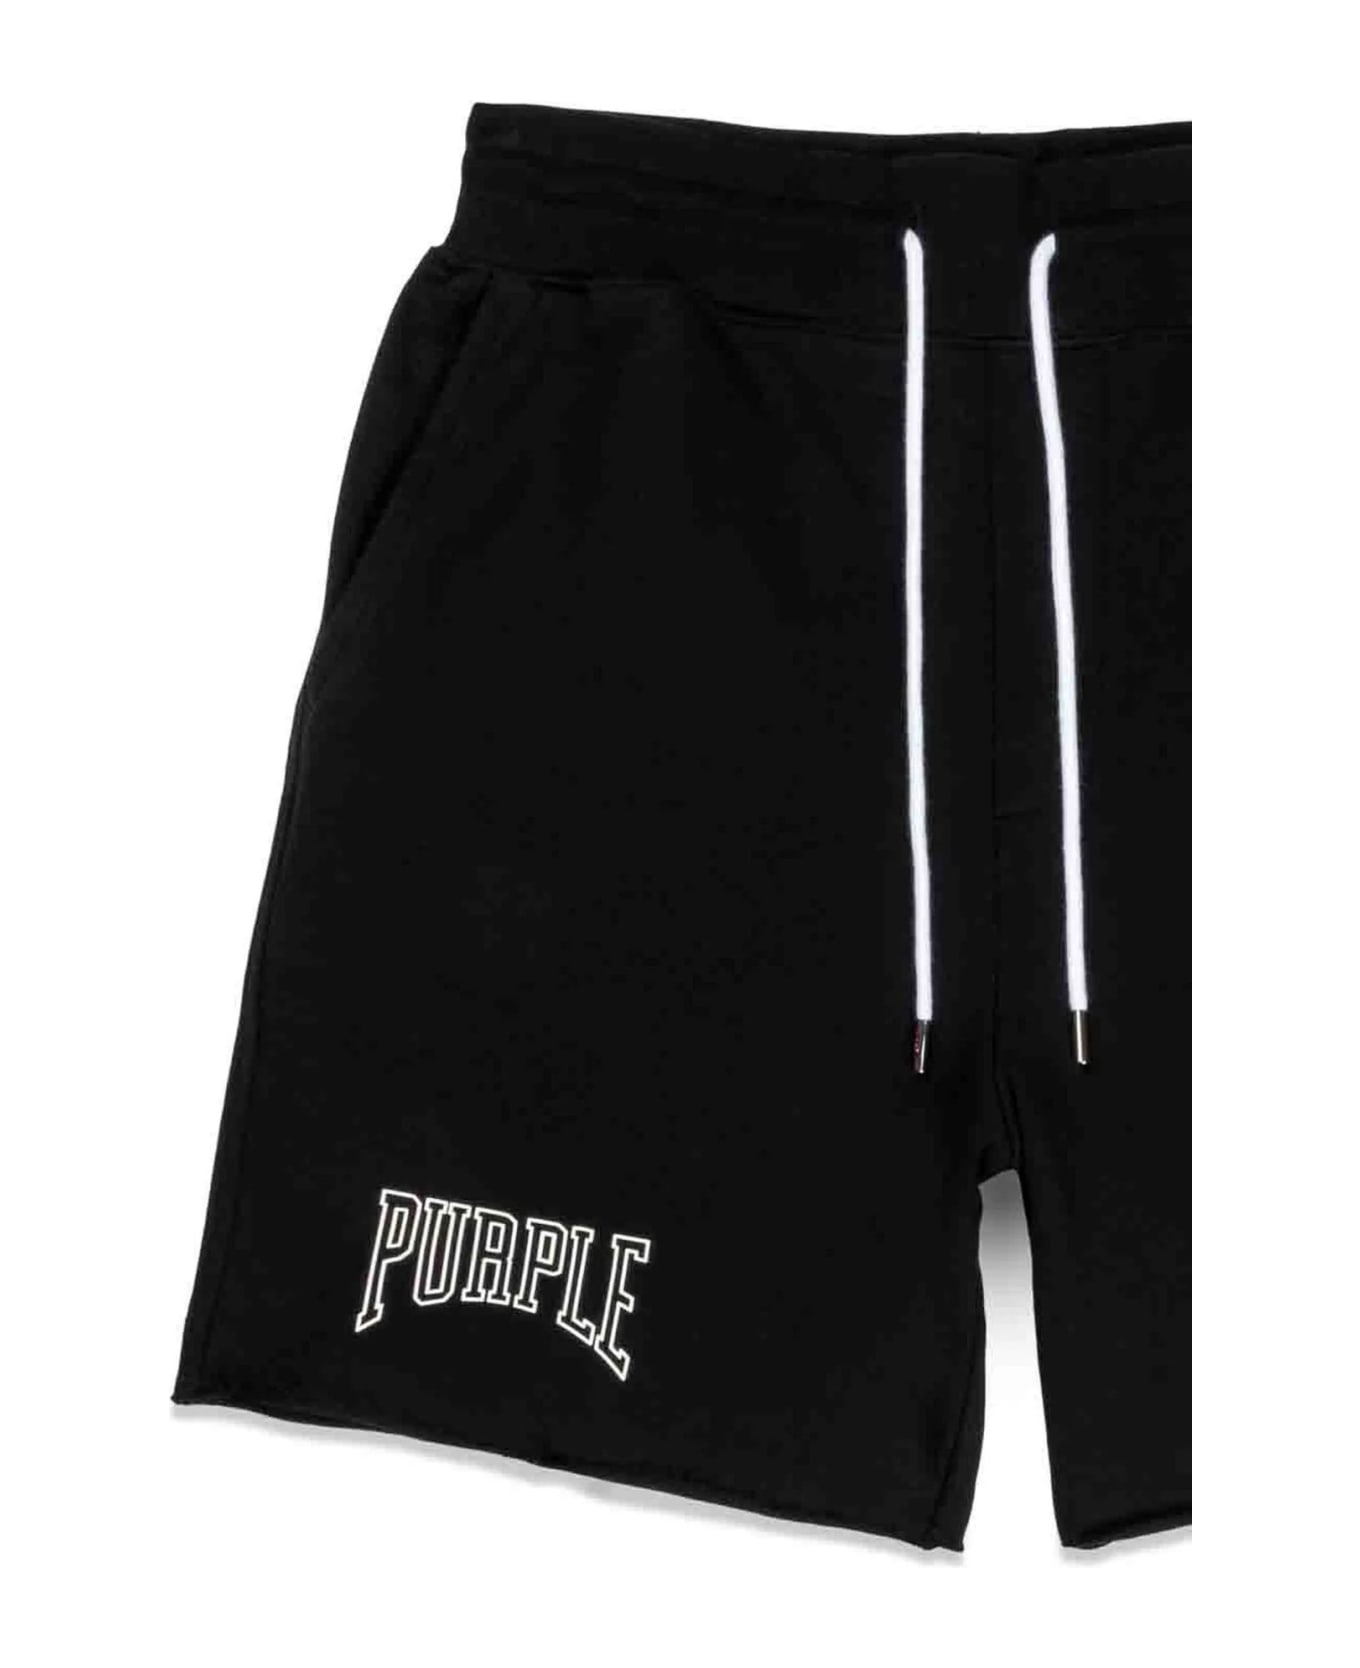 Purple Brand Shorts Black - Black ショートパンツ